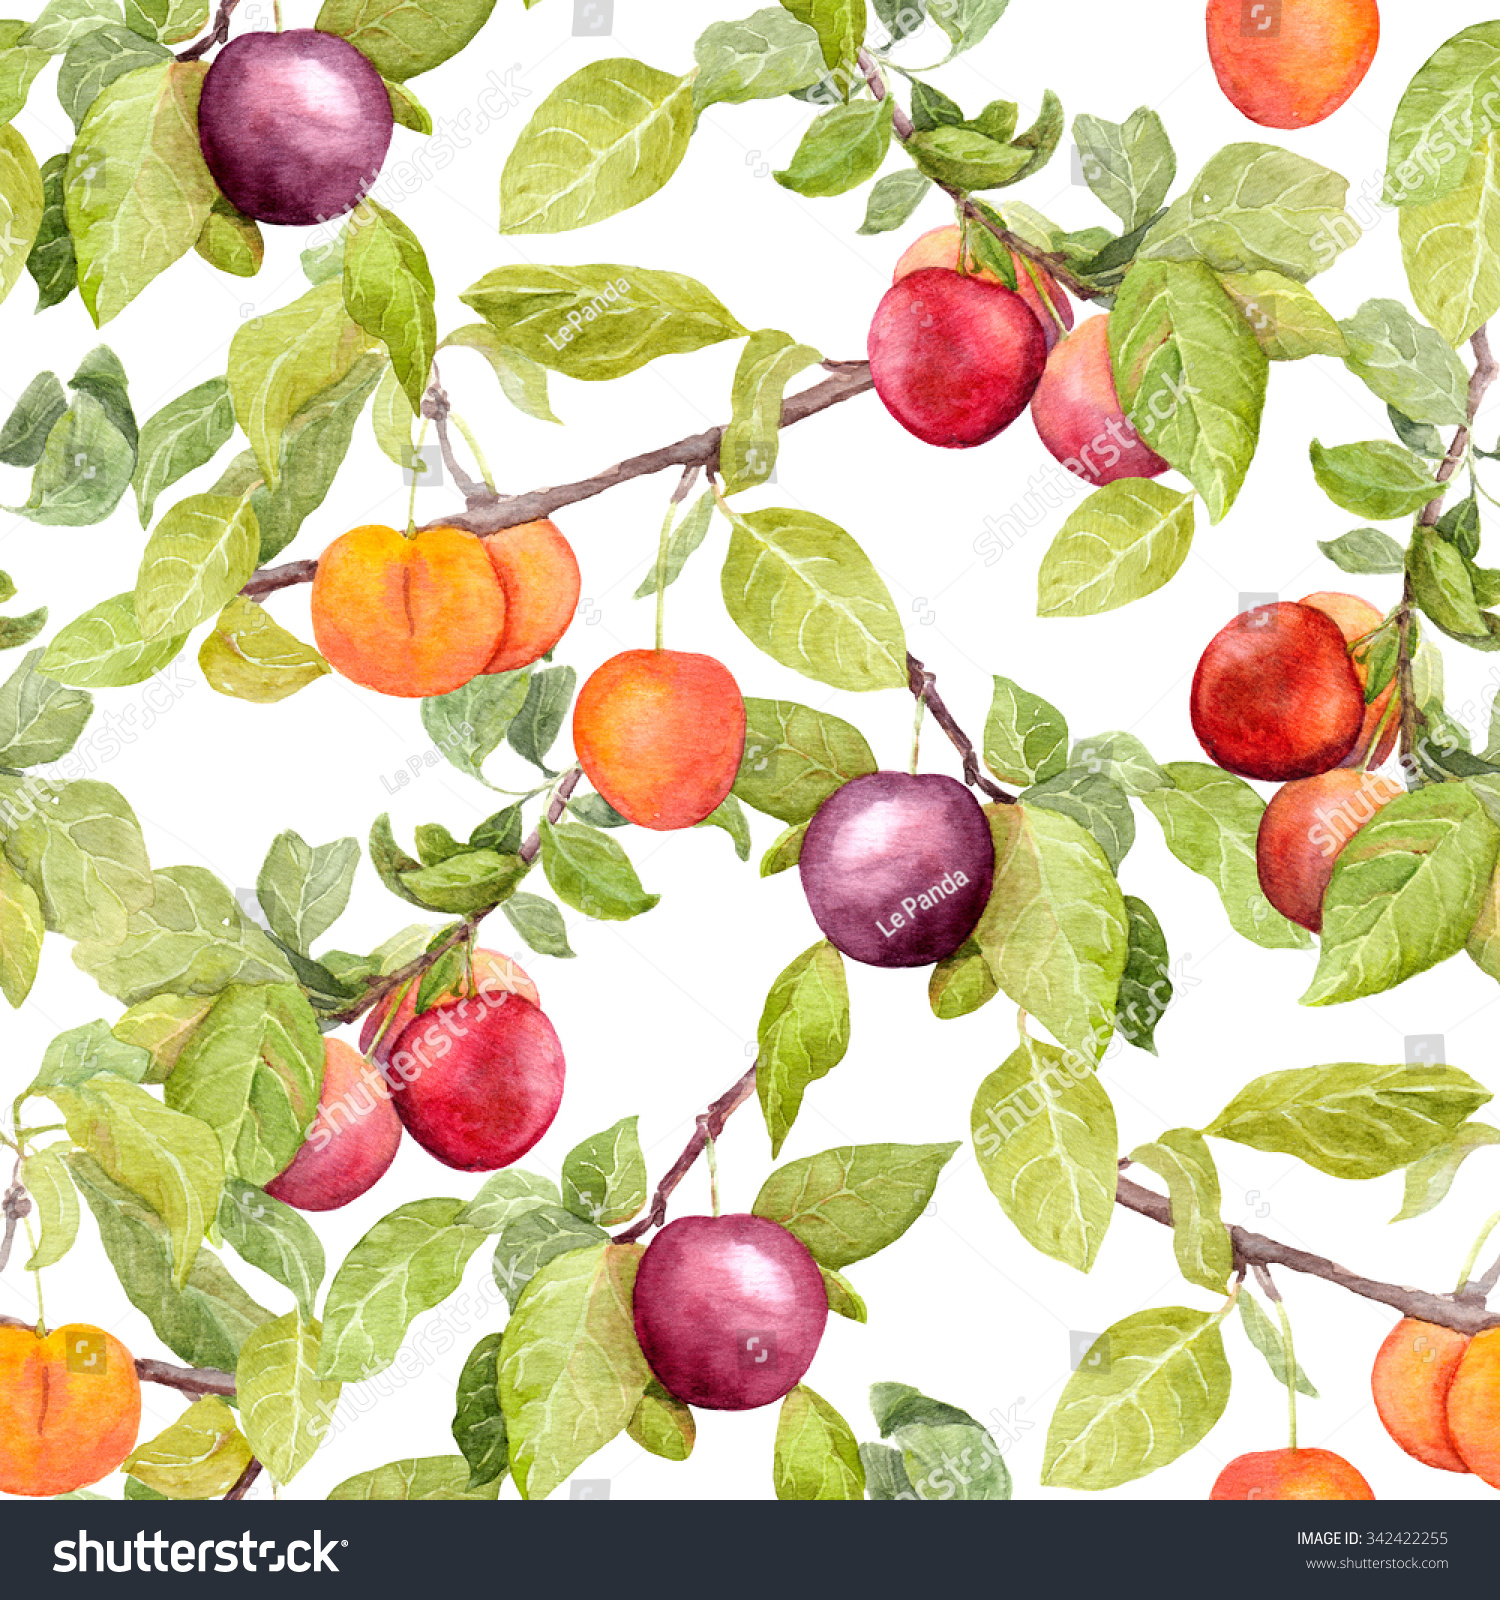 Fruits Garden Plum Cherry Apples Vintage Stock Illustration 342422255